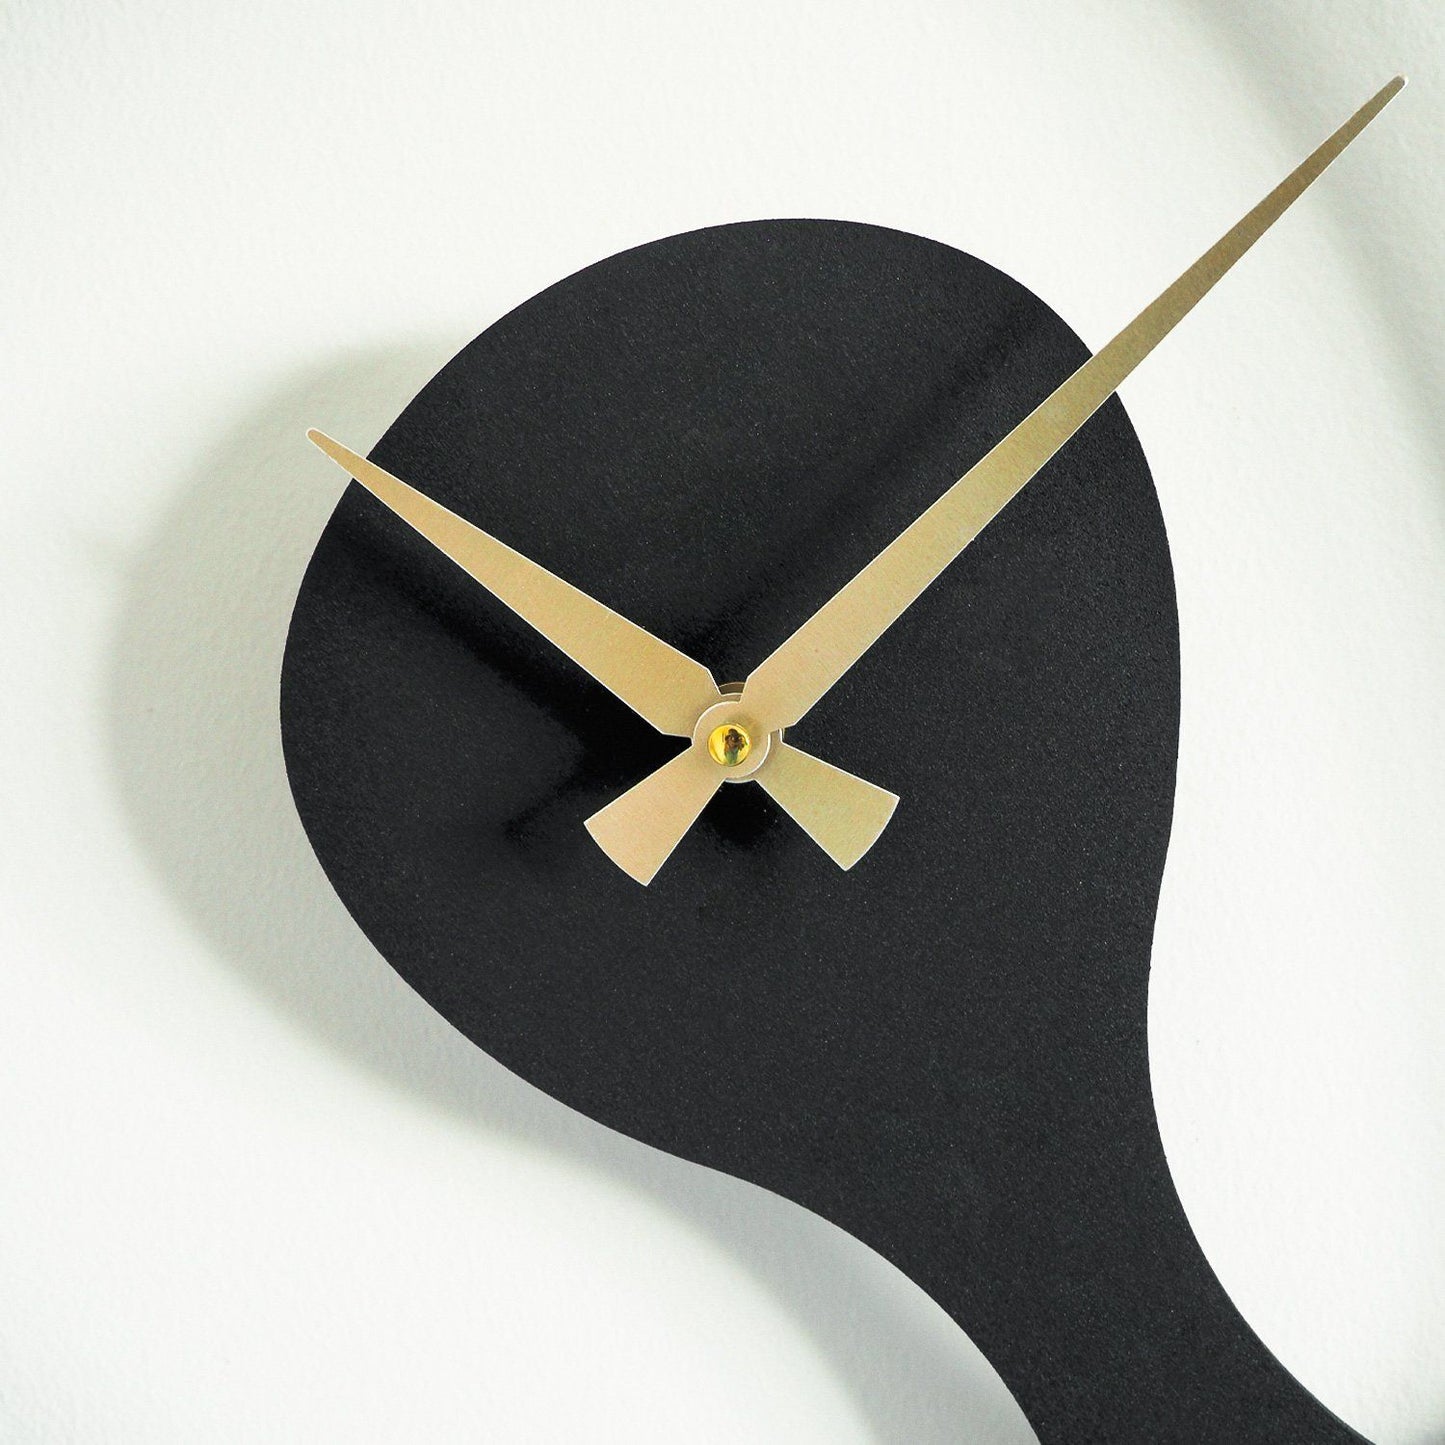 Amorph Metal Wall Clock - APS104 - Decorative Metal Wall Clock